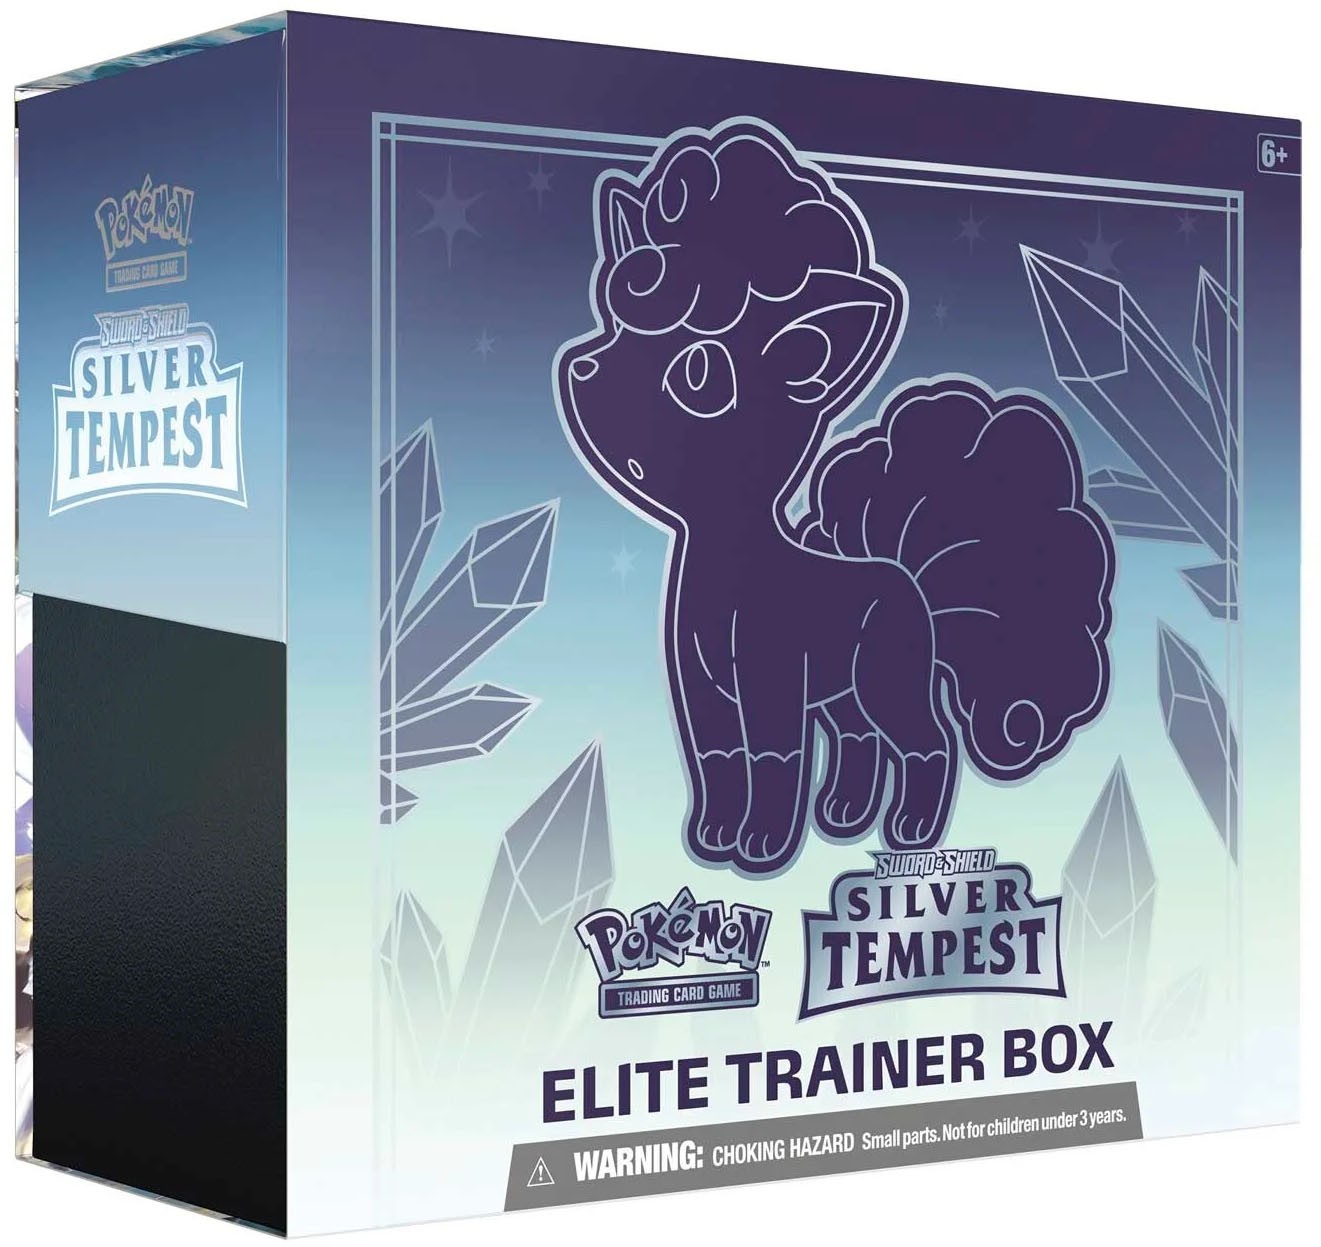 Pokémon Silver Tempest elite trainer box